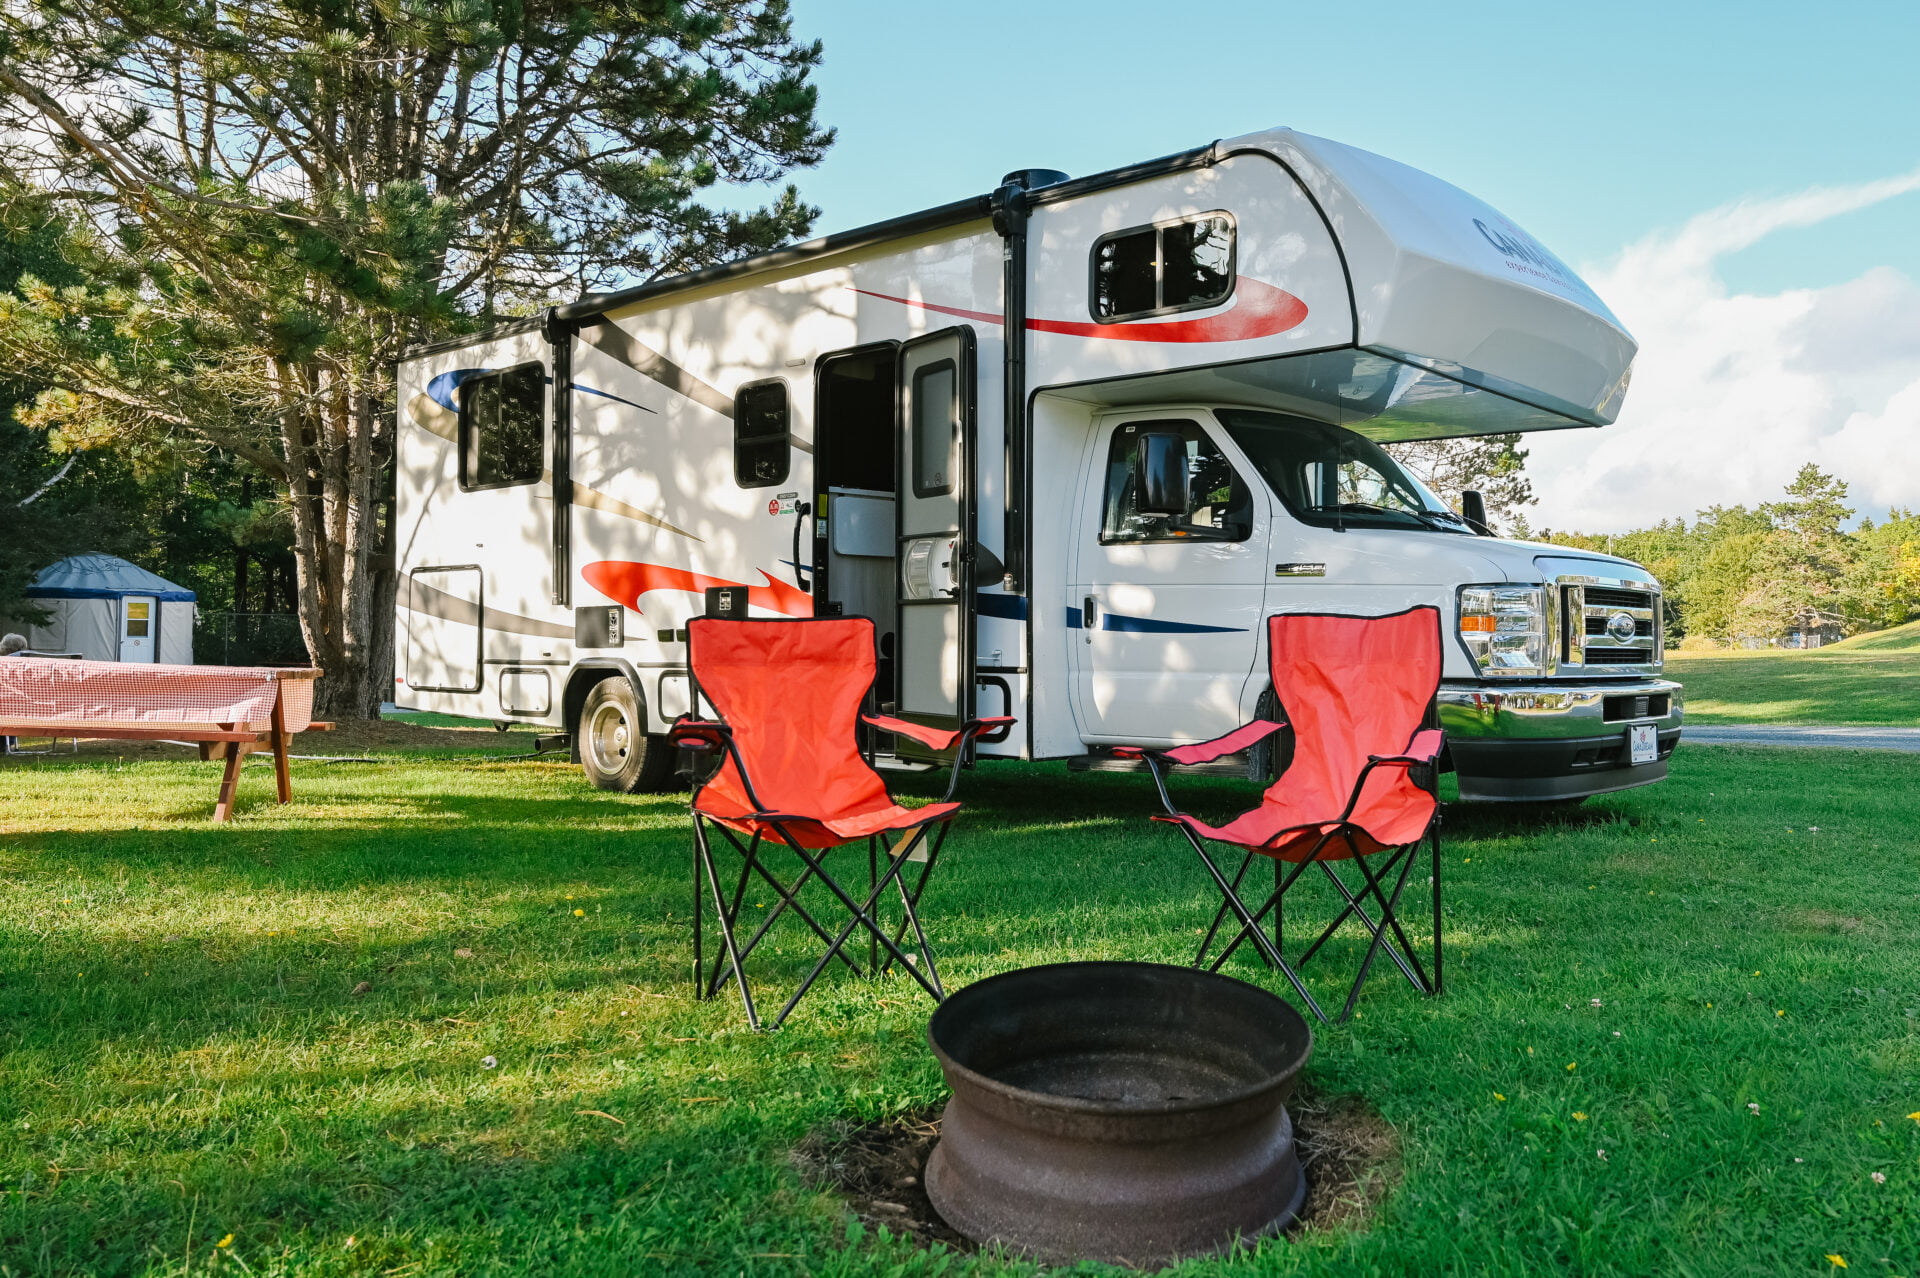 Shubie Park Campground, Dartmouth Nova Scotia, the perfect Halifax road trip camping spot